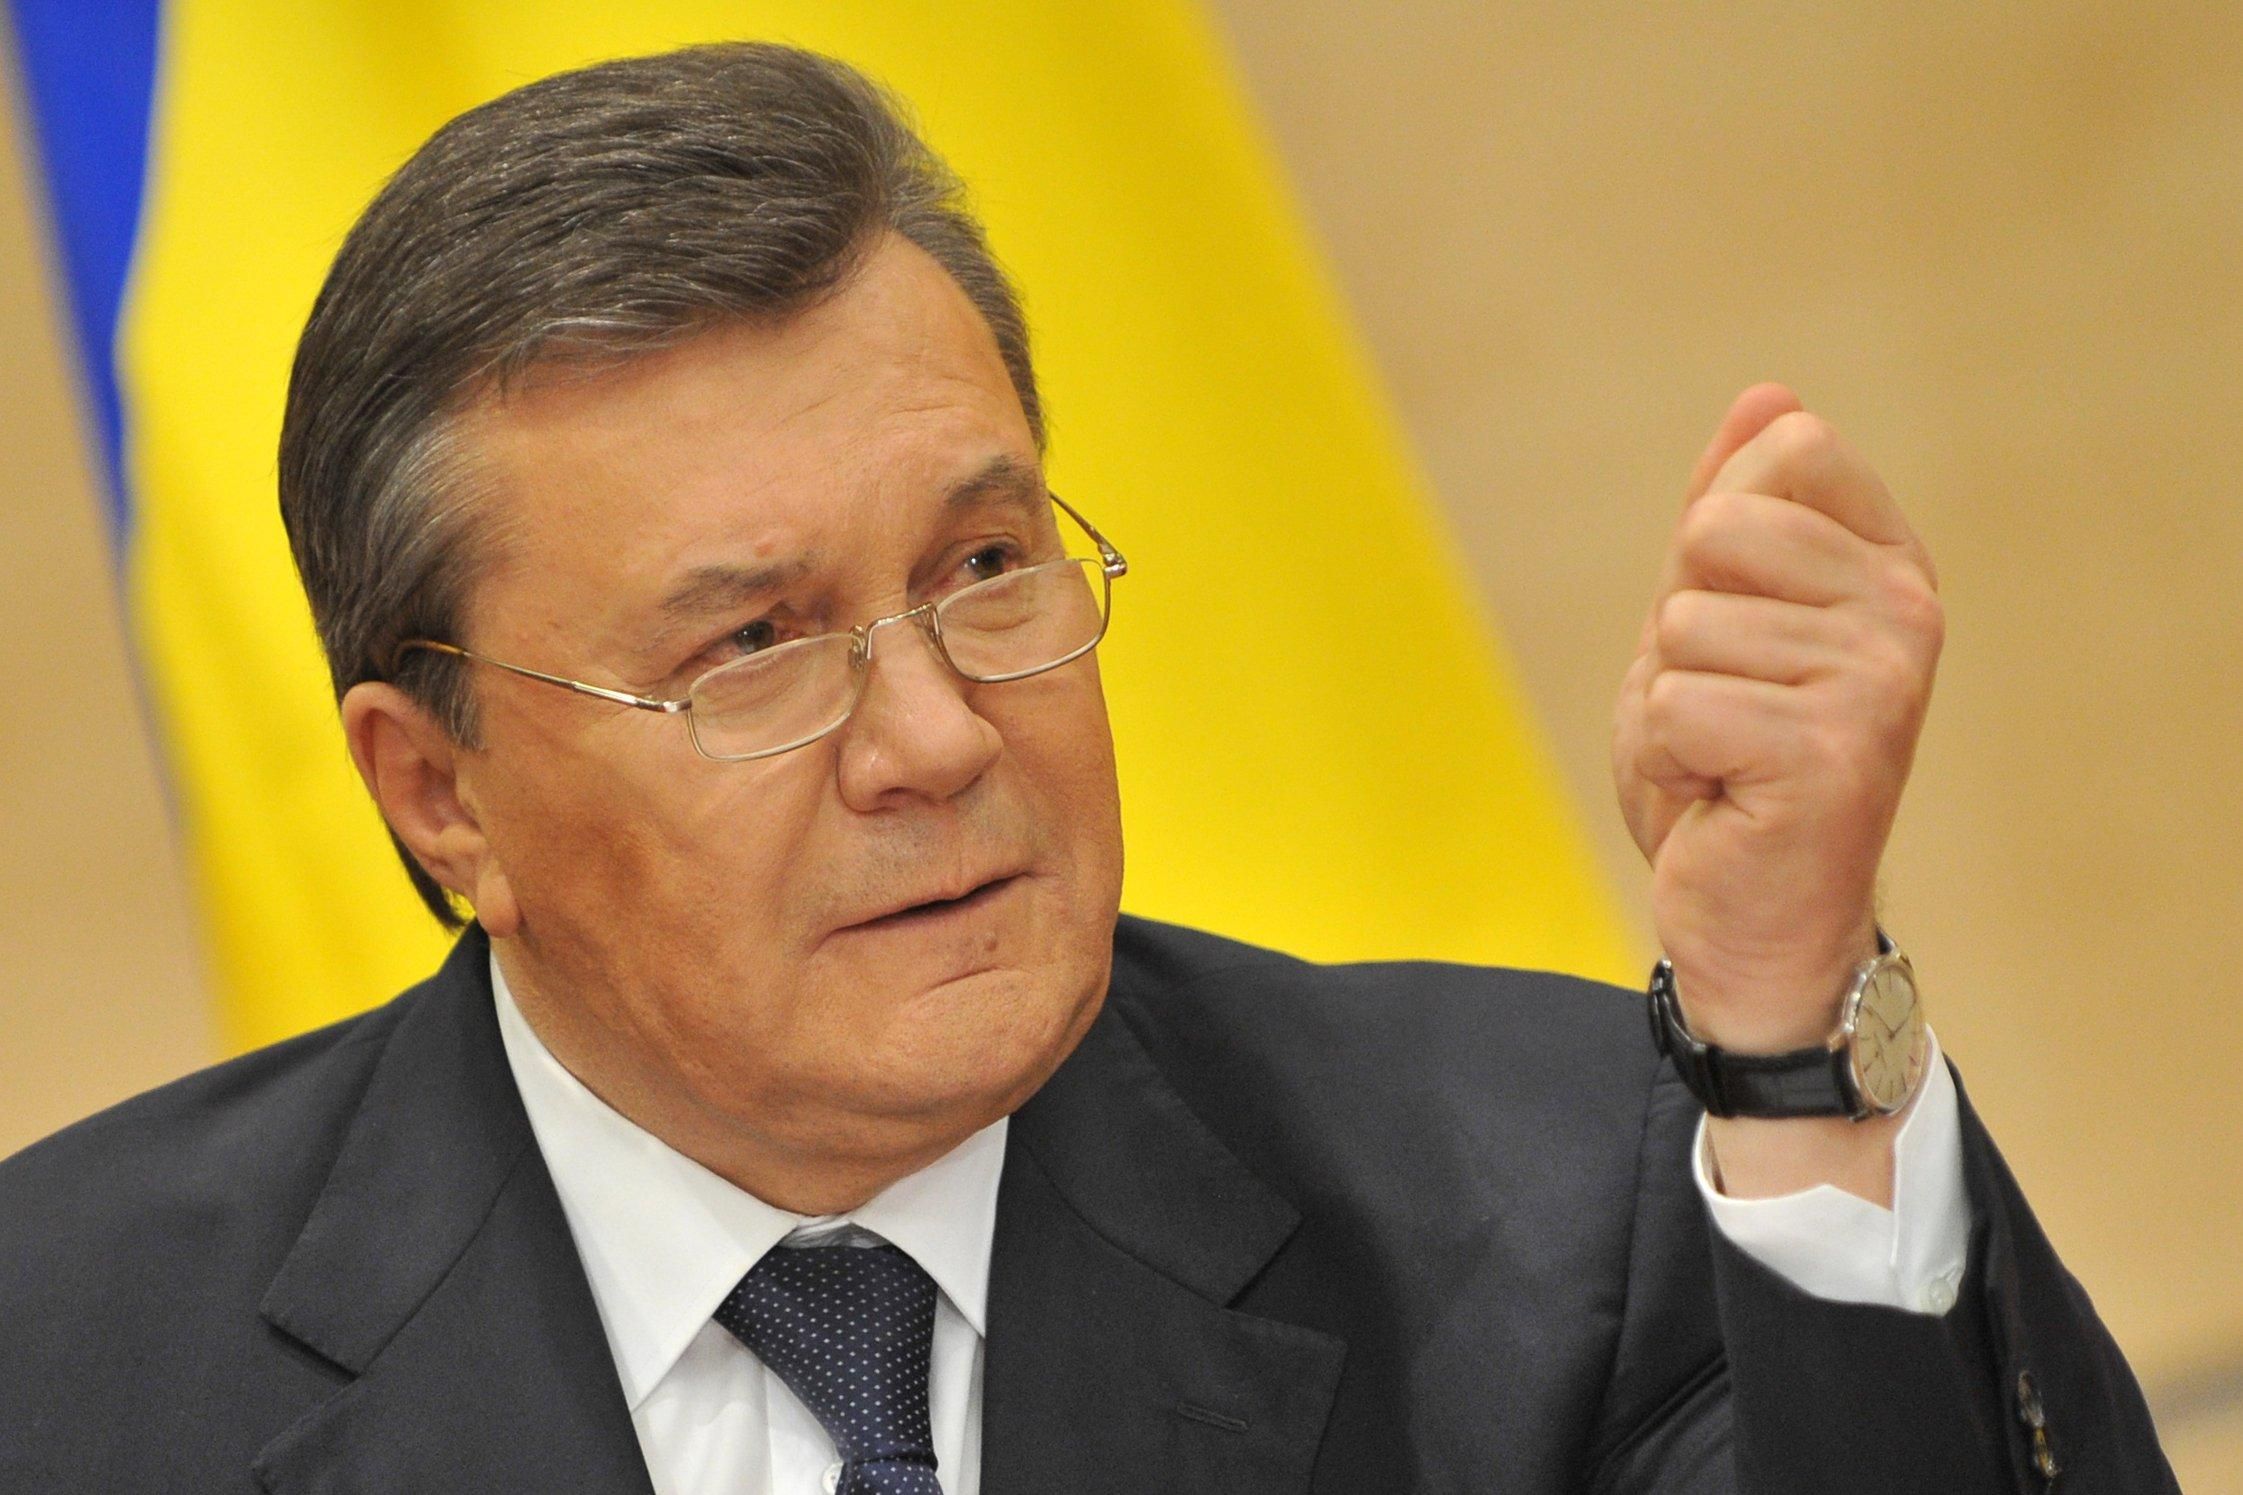 Януковичу объявили новое подозрение